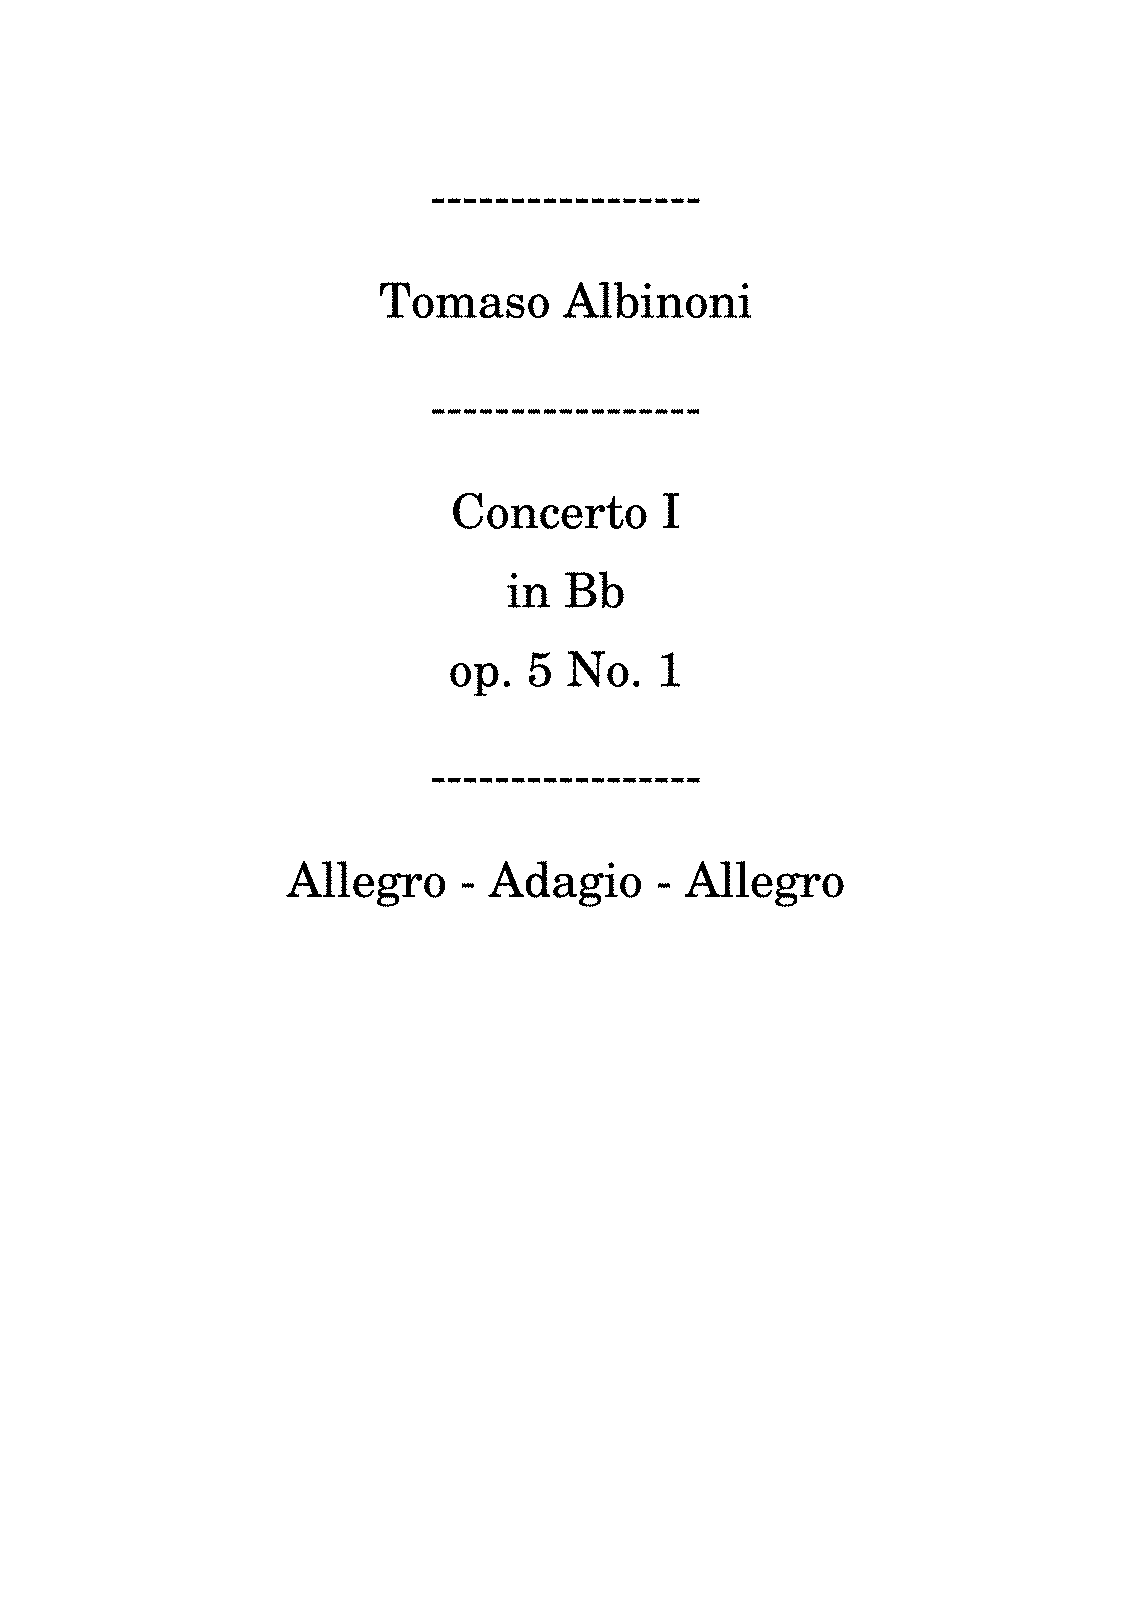 Violin Concerto in B-flat major, Op.5 No.1 (Albinoni, Tomaso) - IMSLP